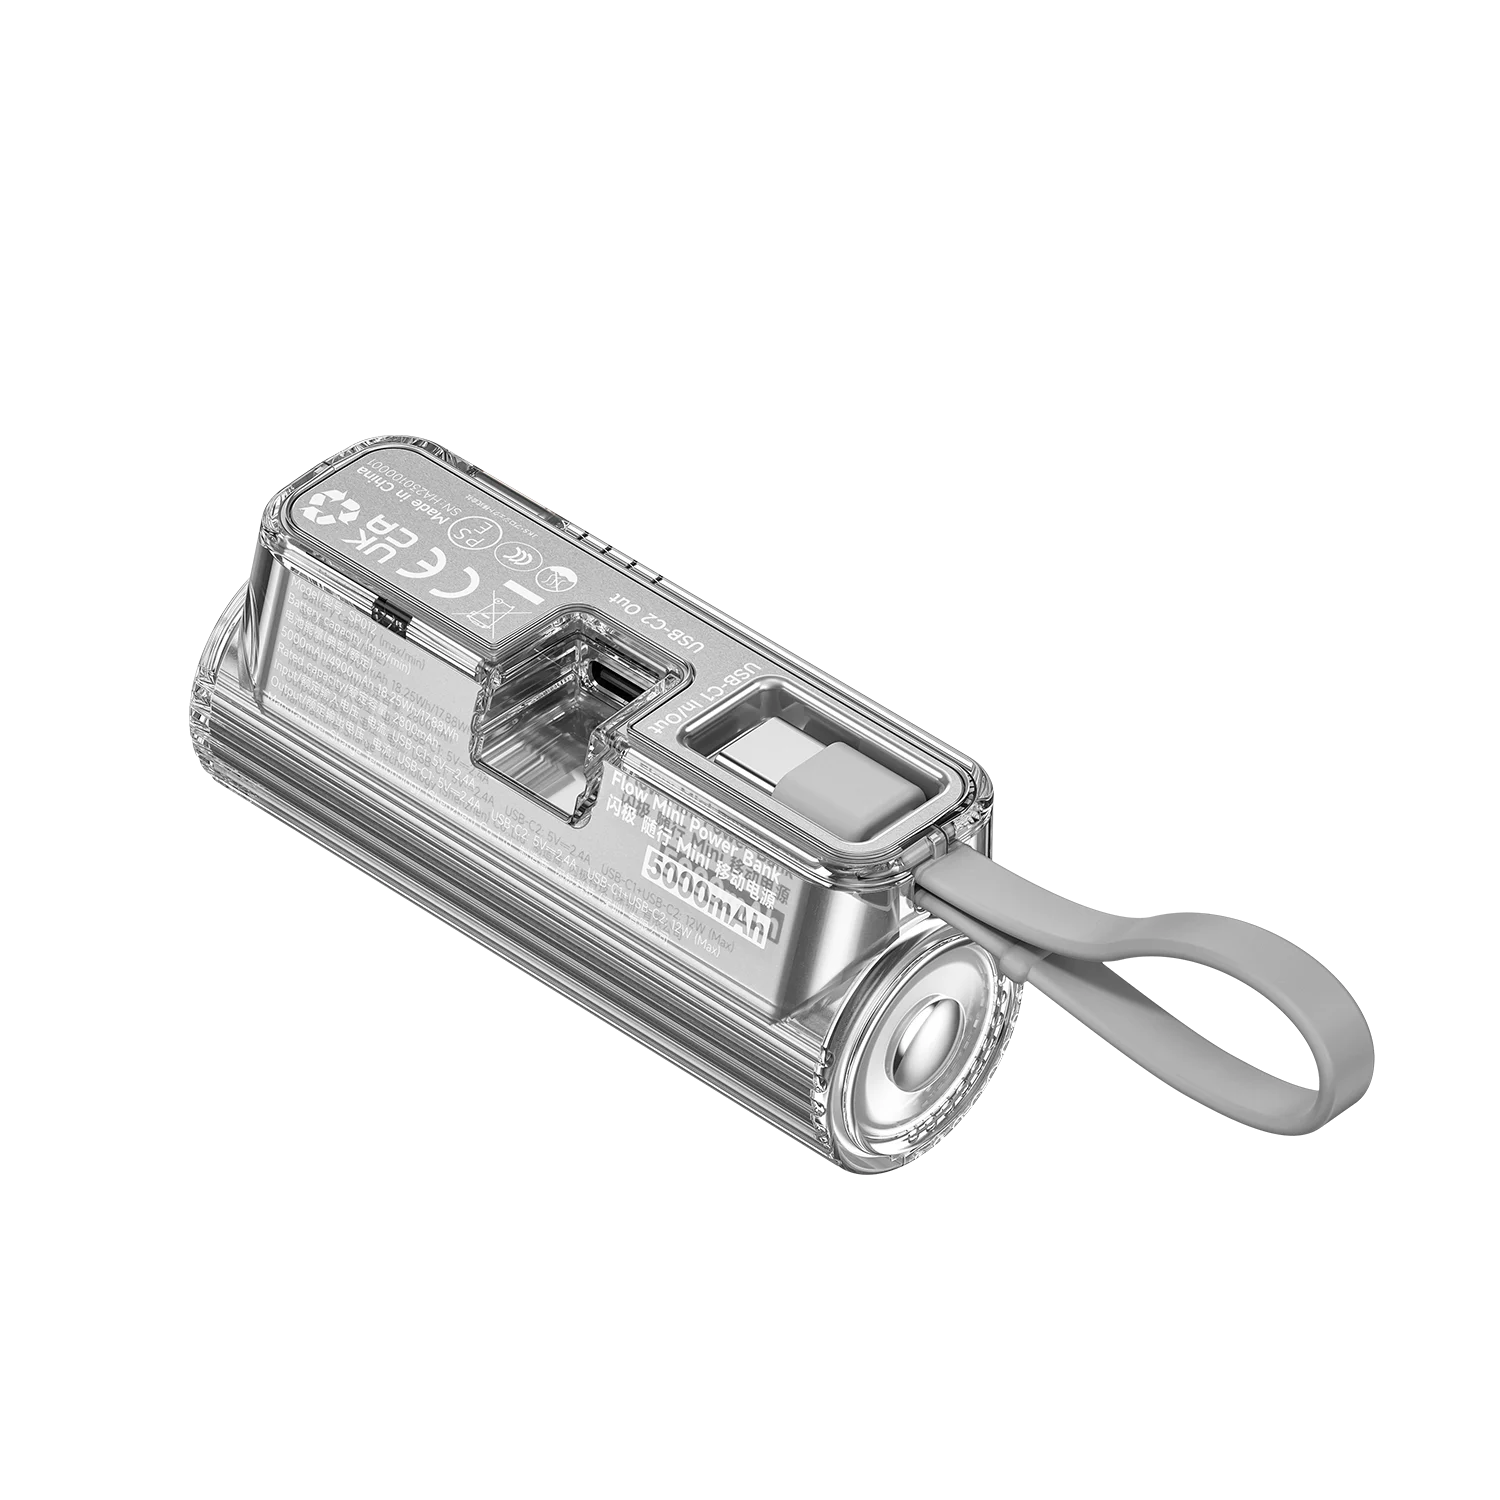 SHARGE-Mini Bateria Auxiliar, Banco de Potência 5000mAh, Dual USB-C, Lightning PD, Interface de Carregamento Rápido, iPhone, Samsung, HUAWE